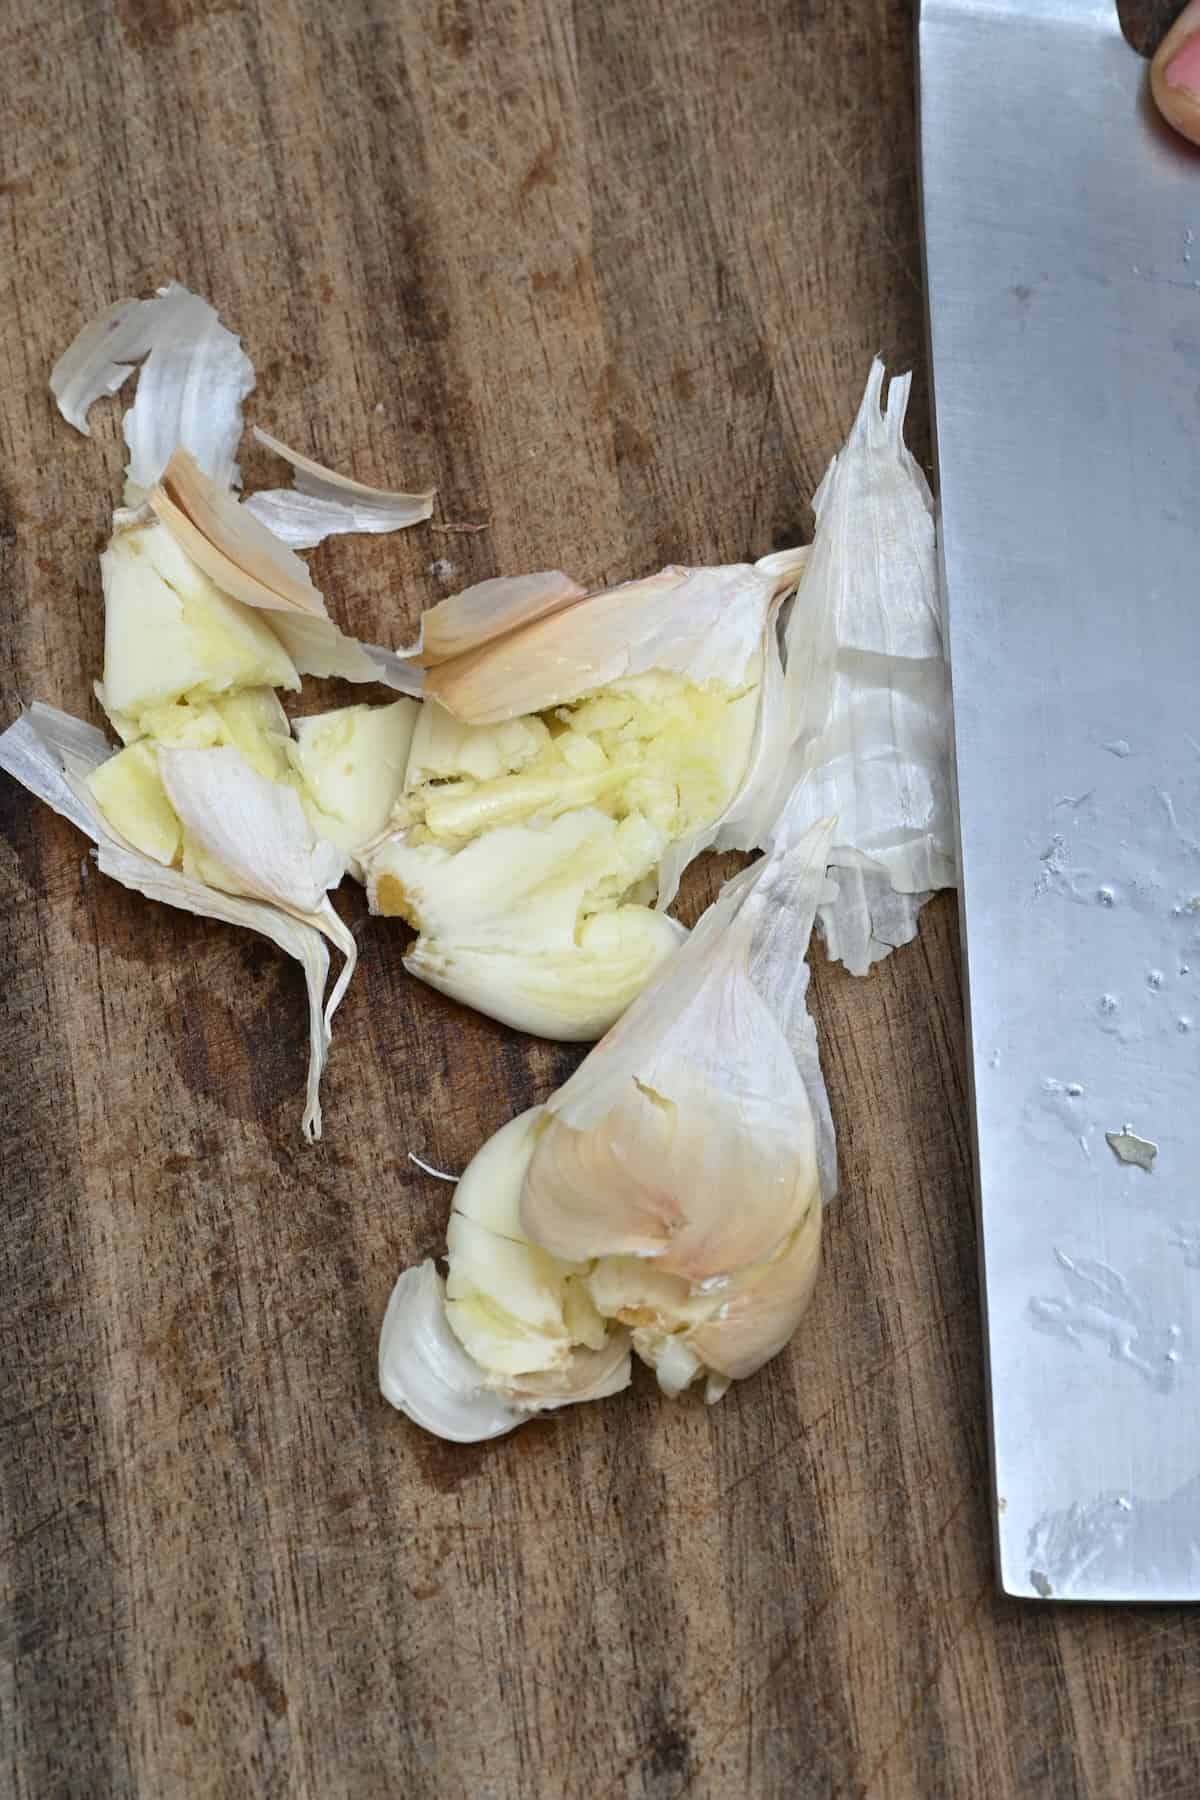 Crushing garlic with a knife